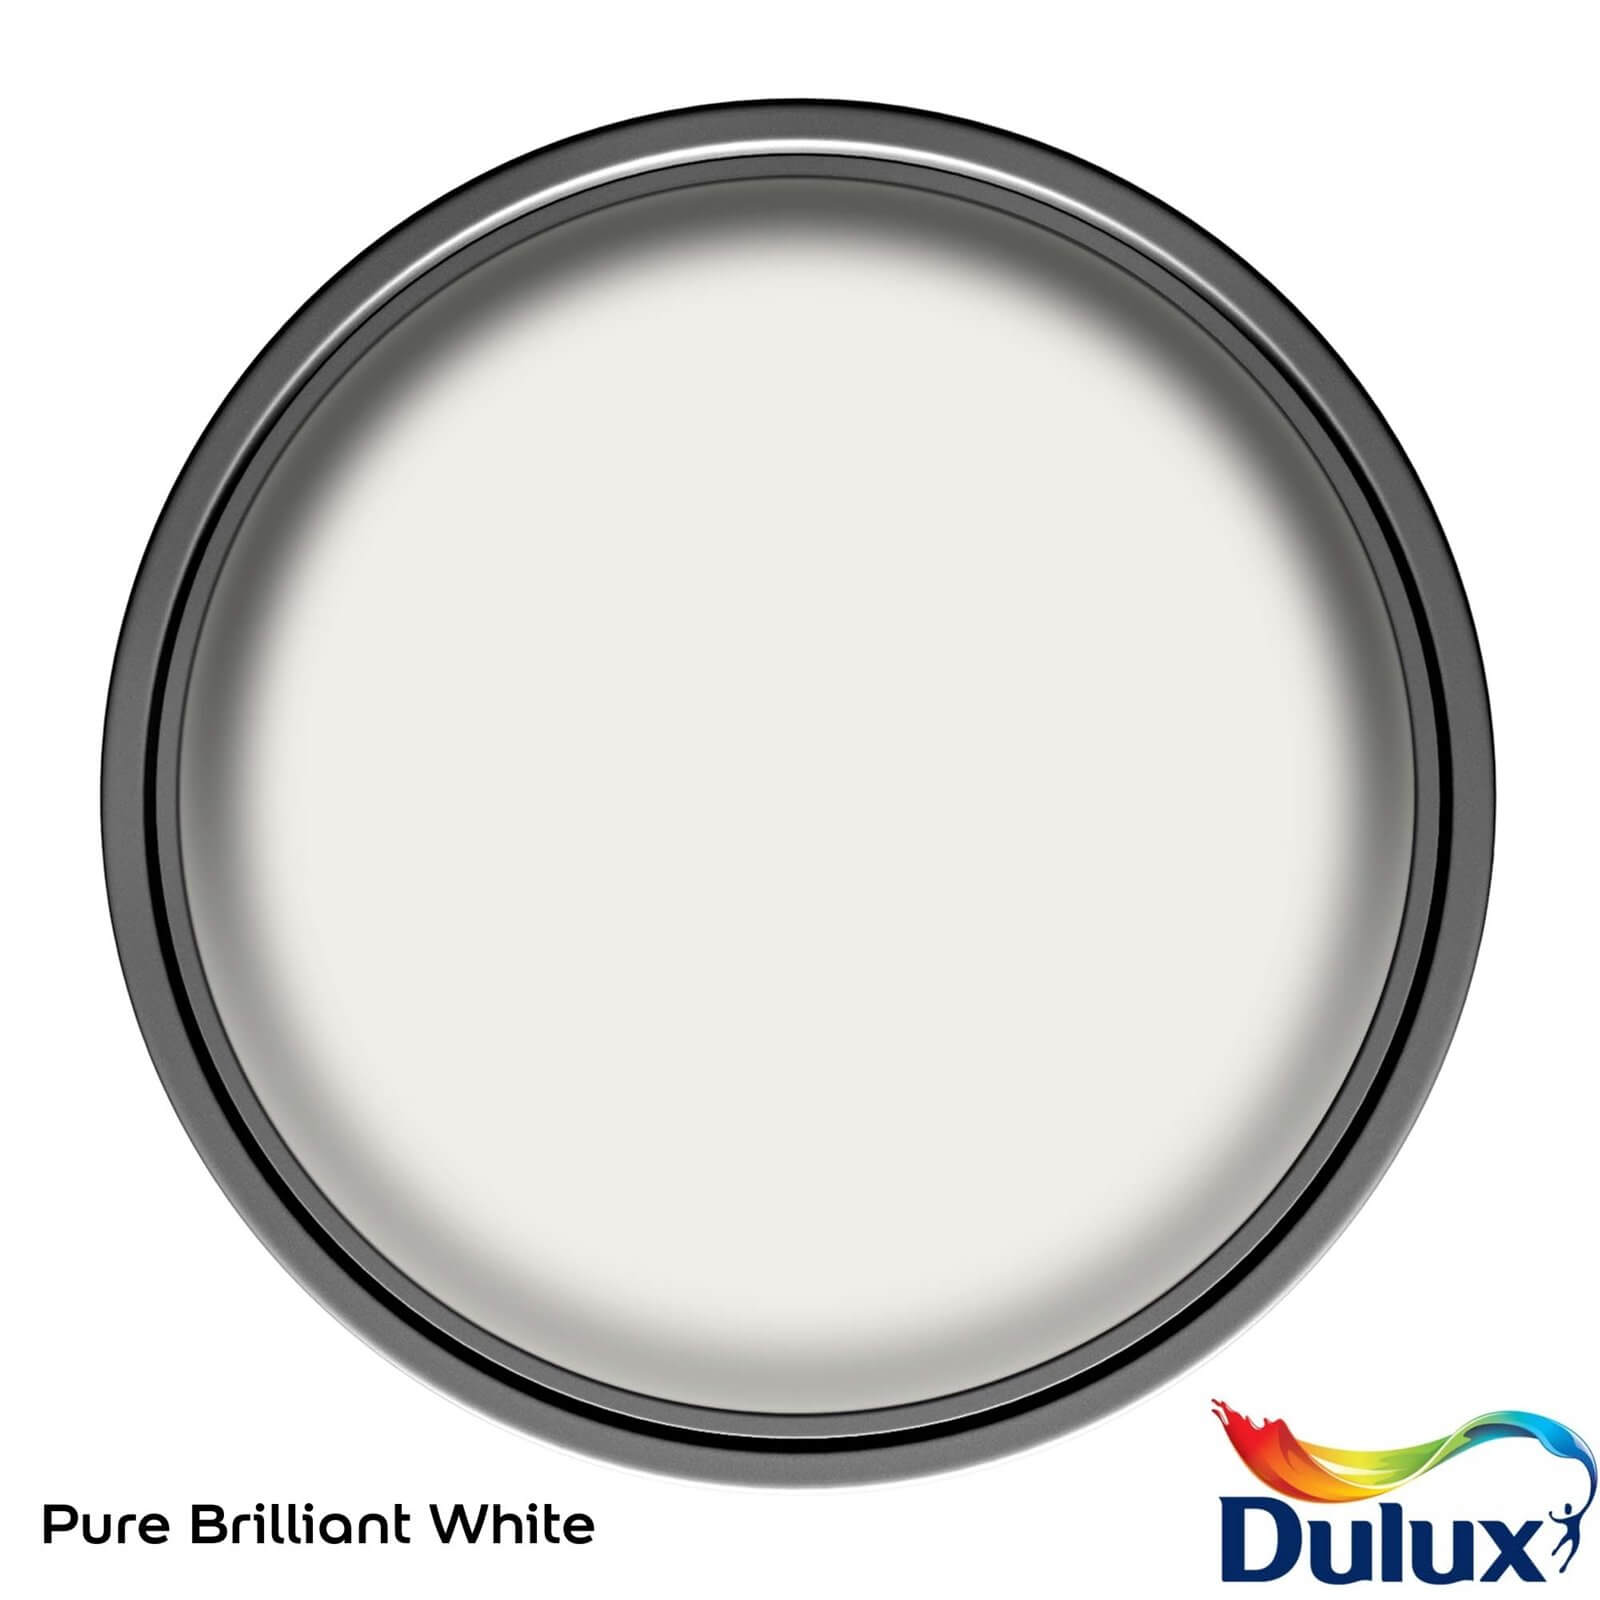 Dulux Quick Dry Satinwood Pure Brilliant White - 750ml